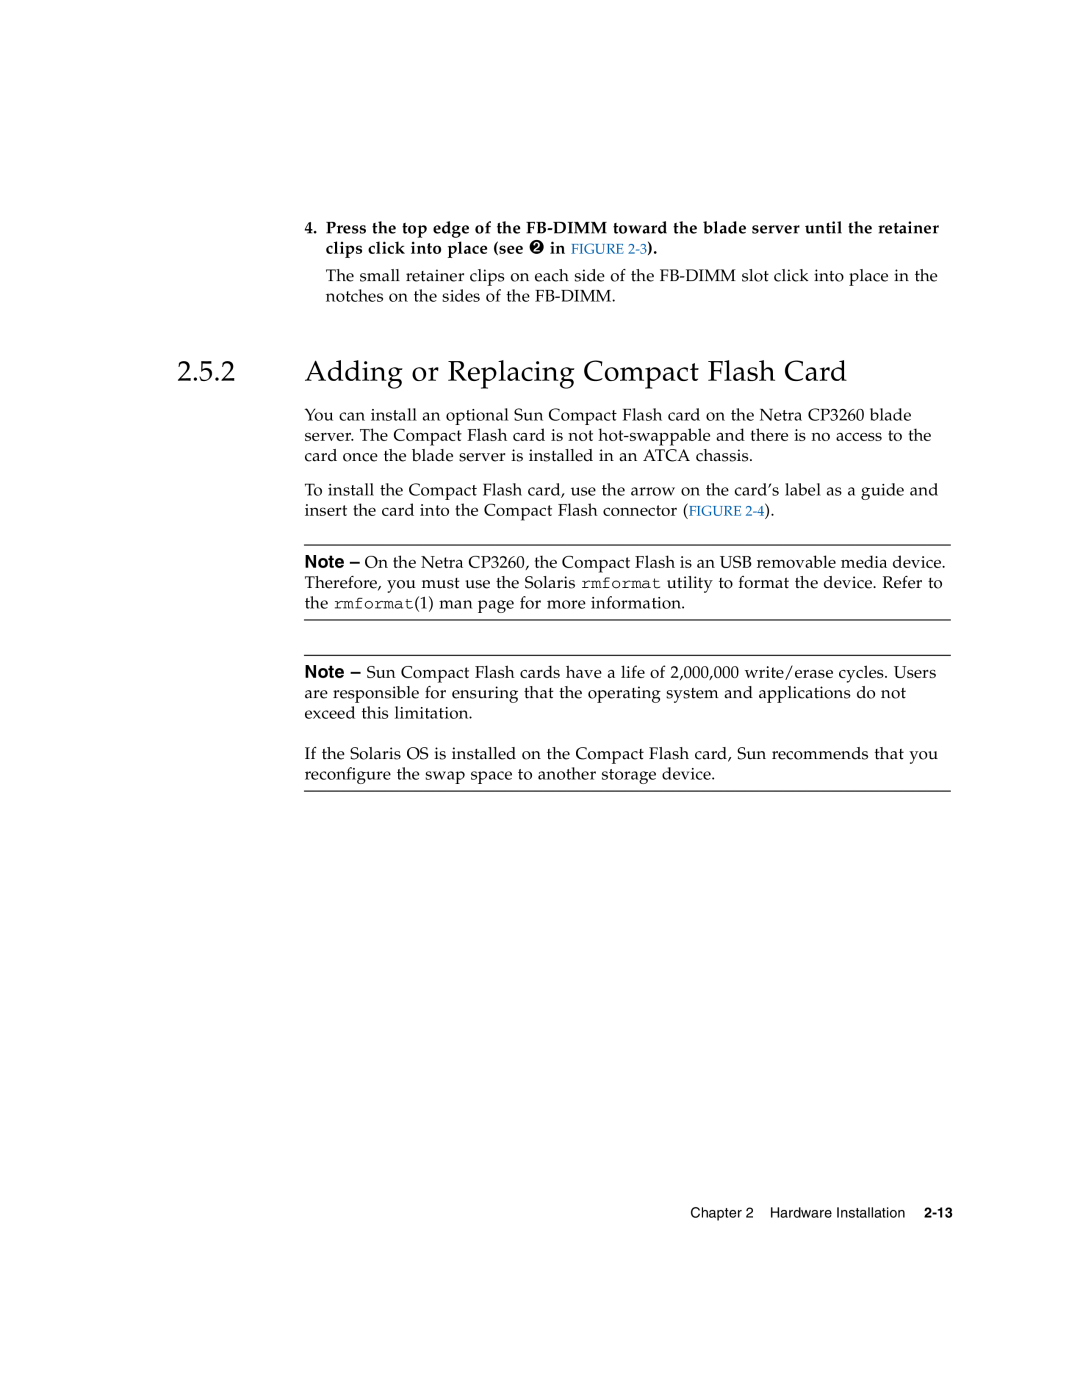 Sun Microsystems CP3260 manual Adding or Replacing Compact Flash Card 